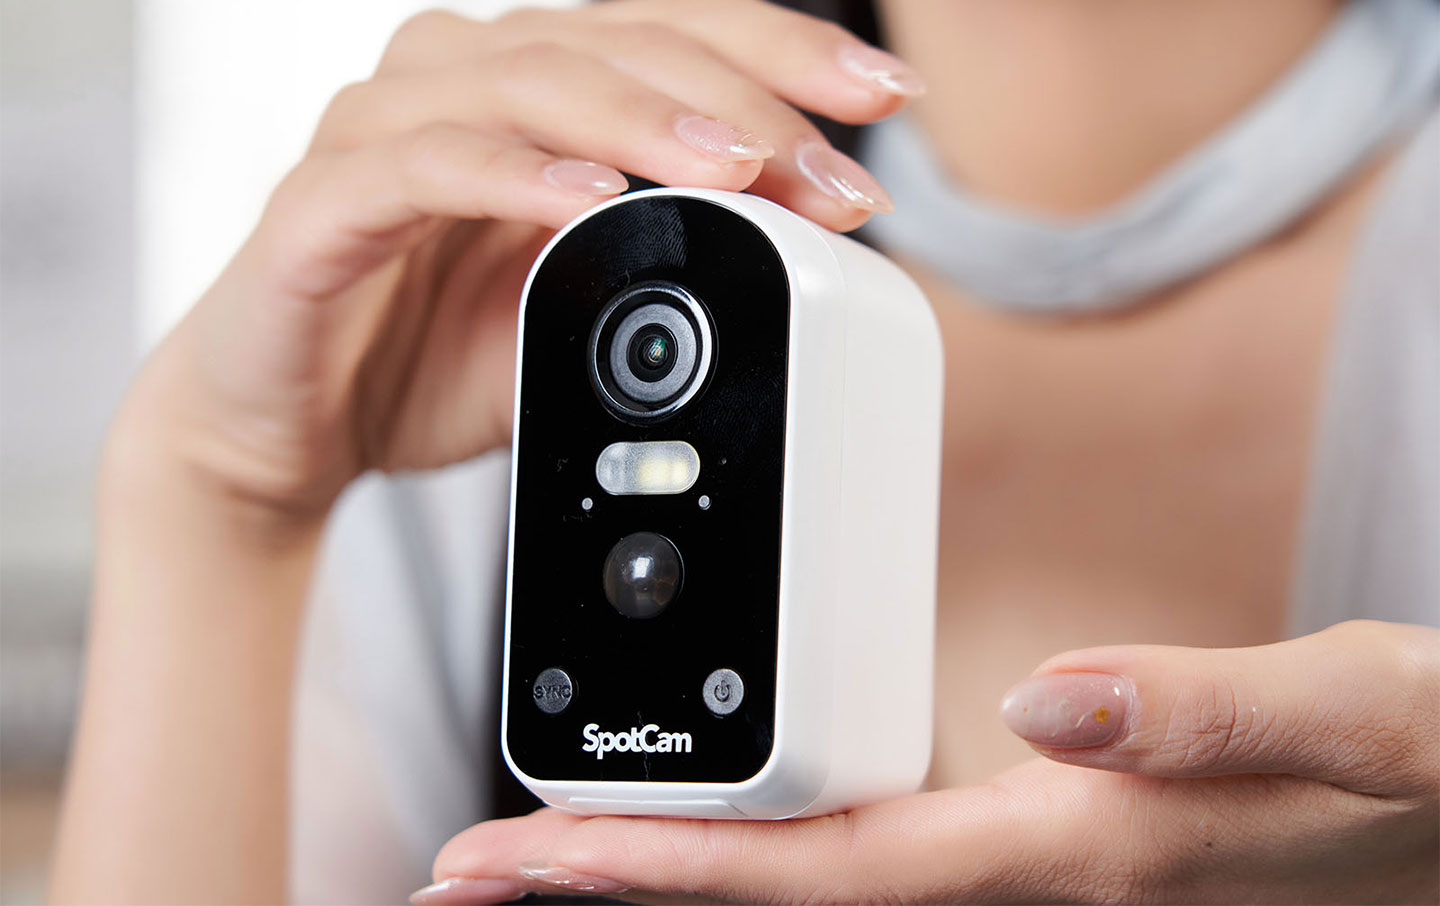 SpotCam Solo Pro 面為全黑配，可看到鏡、補光燈、動態偵測器、電源鍵與同鍵。